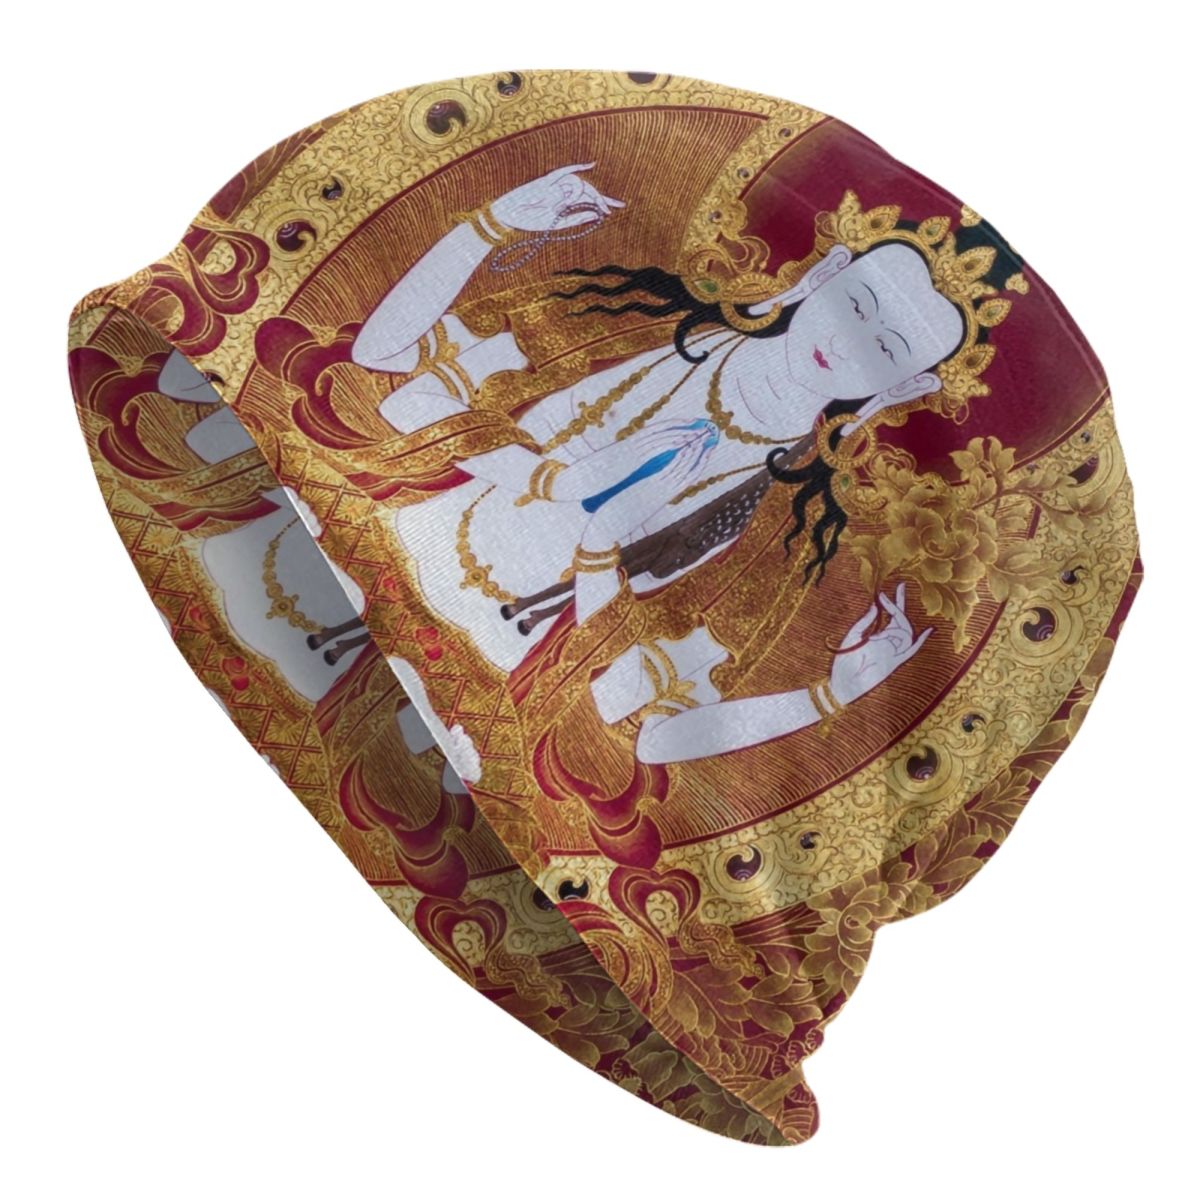 Buddha Meditation Spiritual Bonnet Hats Street Knitting Hat Autumn Winter Warm Buddhism Buddhist Mandala Skullies Beanies Caps